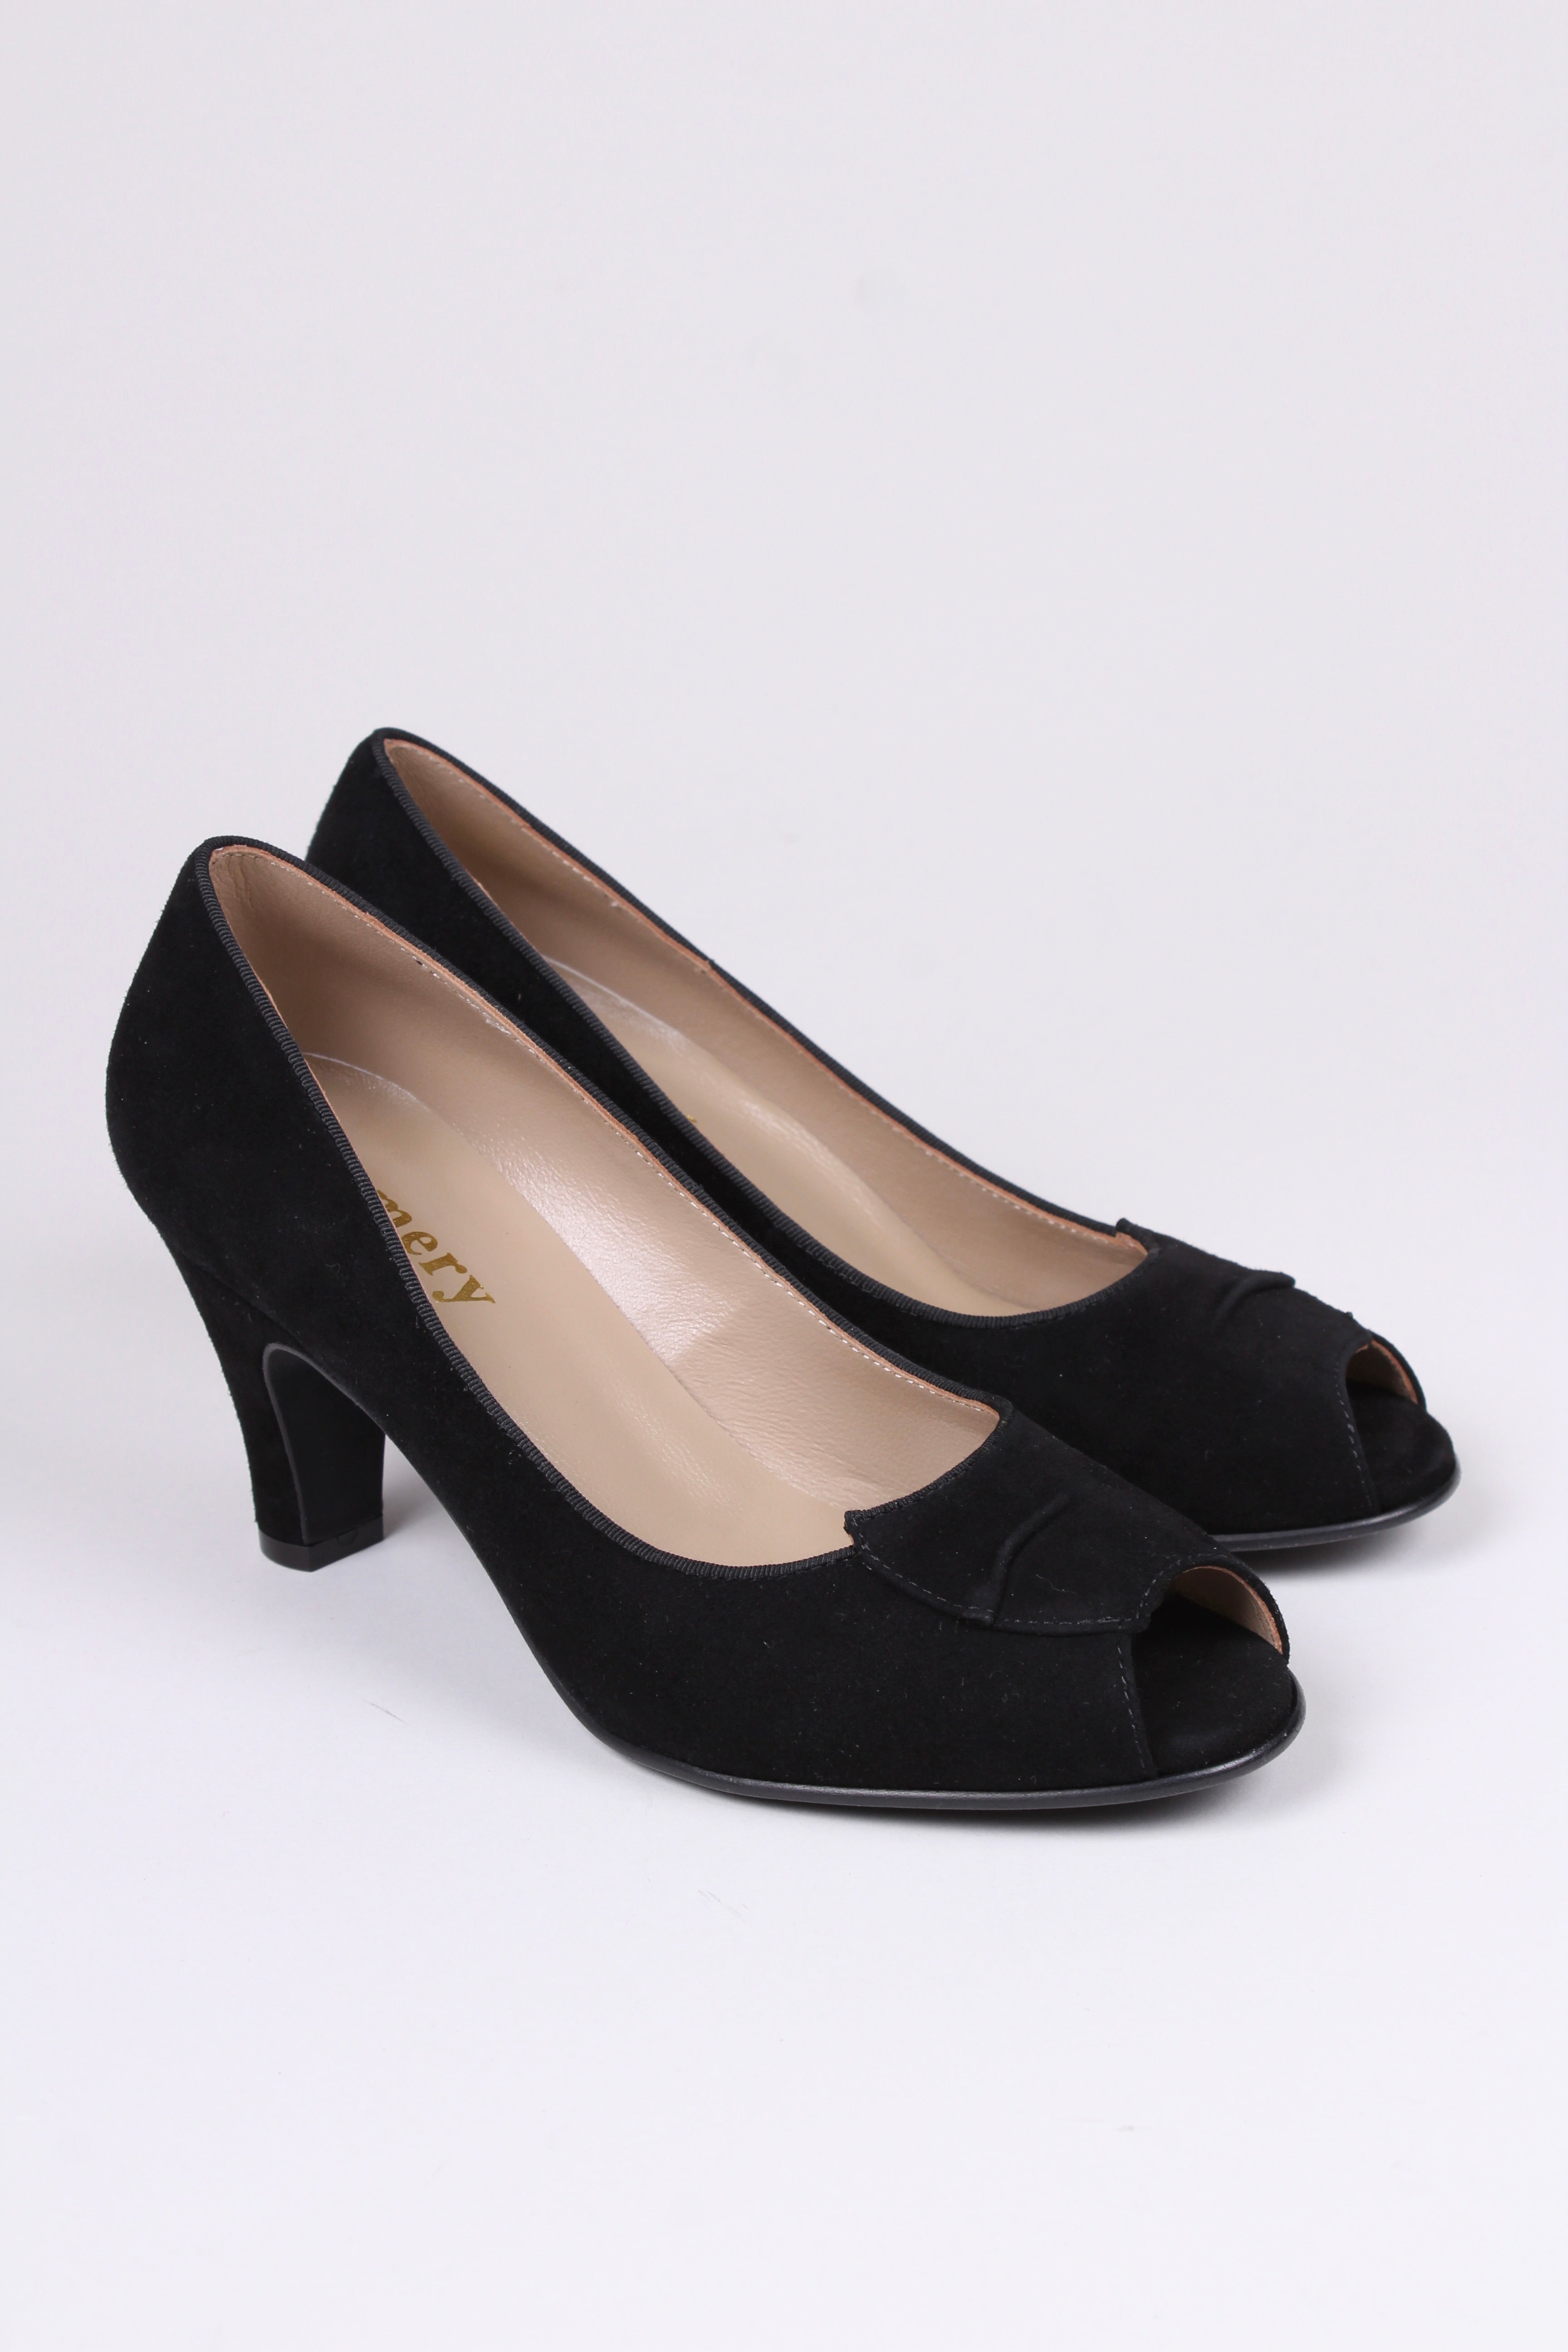 Amazon.com | Jimishow Women High Heel Pumps Plain Pumps Stiletto High Heels  3.3 inches/8.5CM Pointed Toe Sexy Dress Shoes Slip On Pumps for Women US  Size 5 Black Kid | Shoes